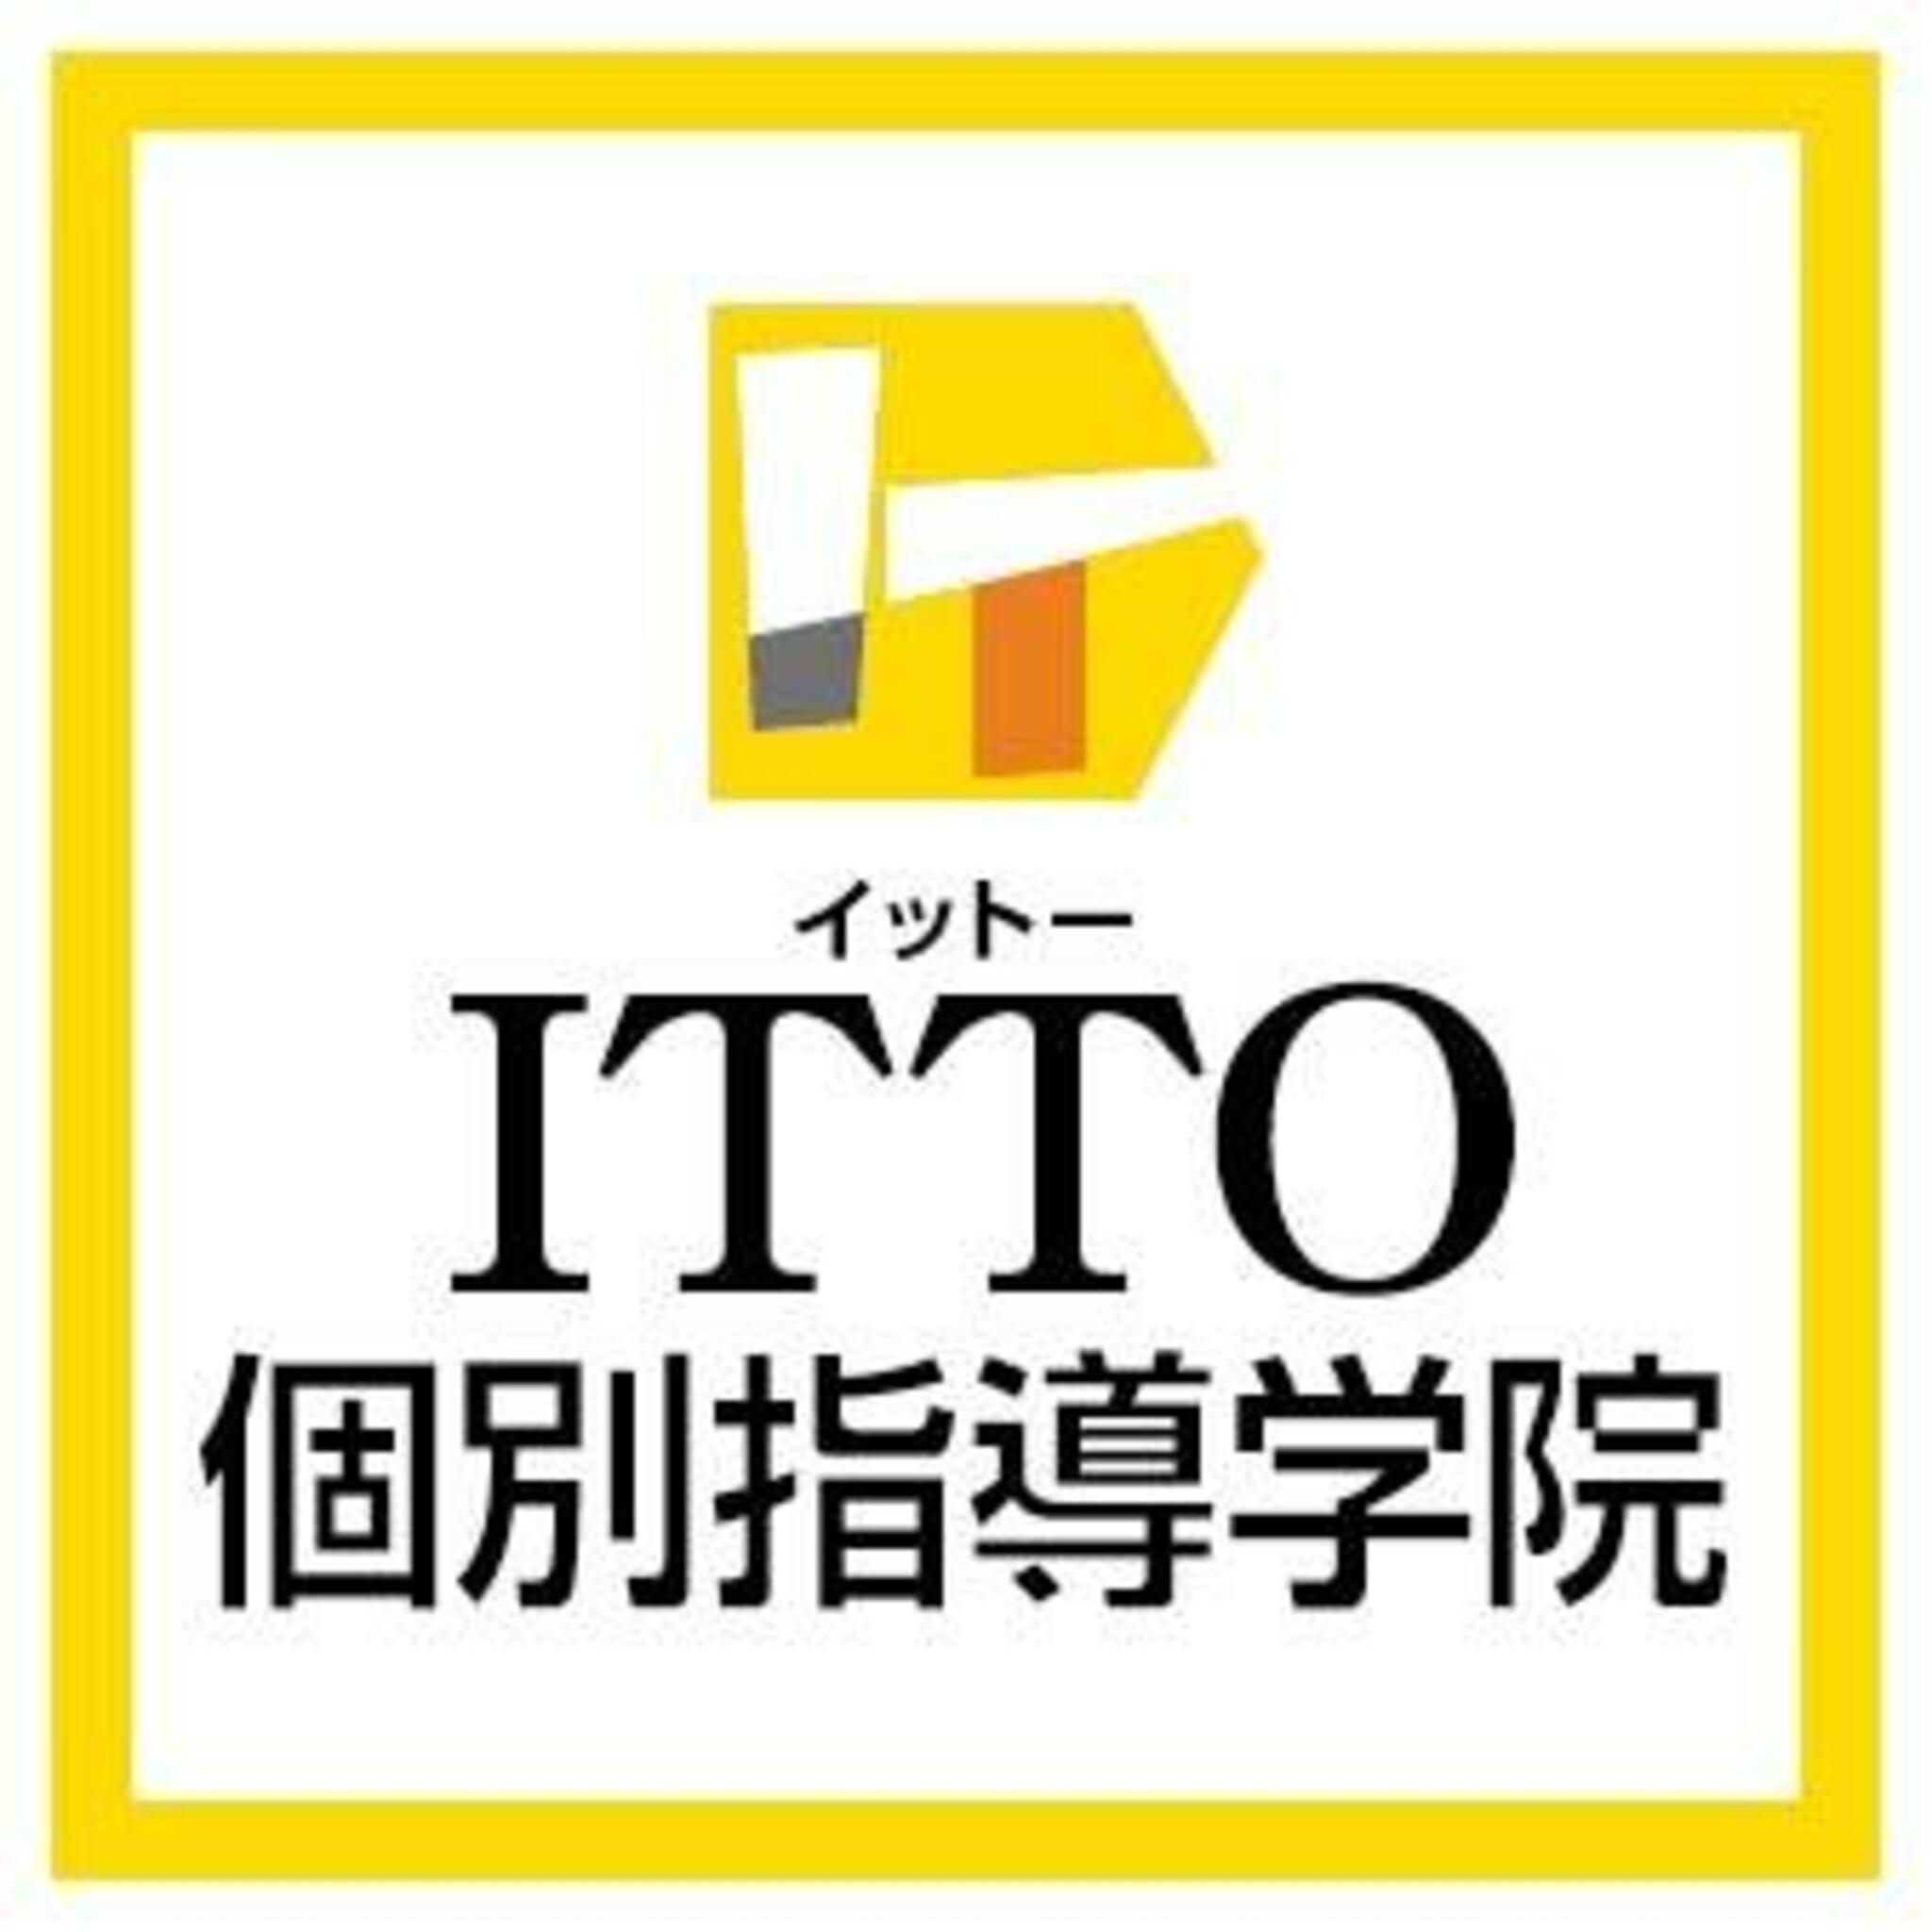 ITTO個別指導学院 東舞鶴駅前校の代表写真6